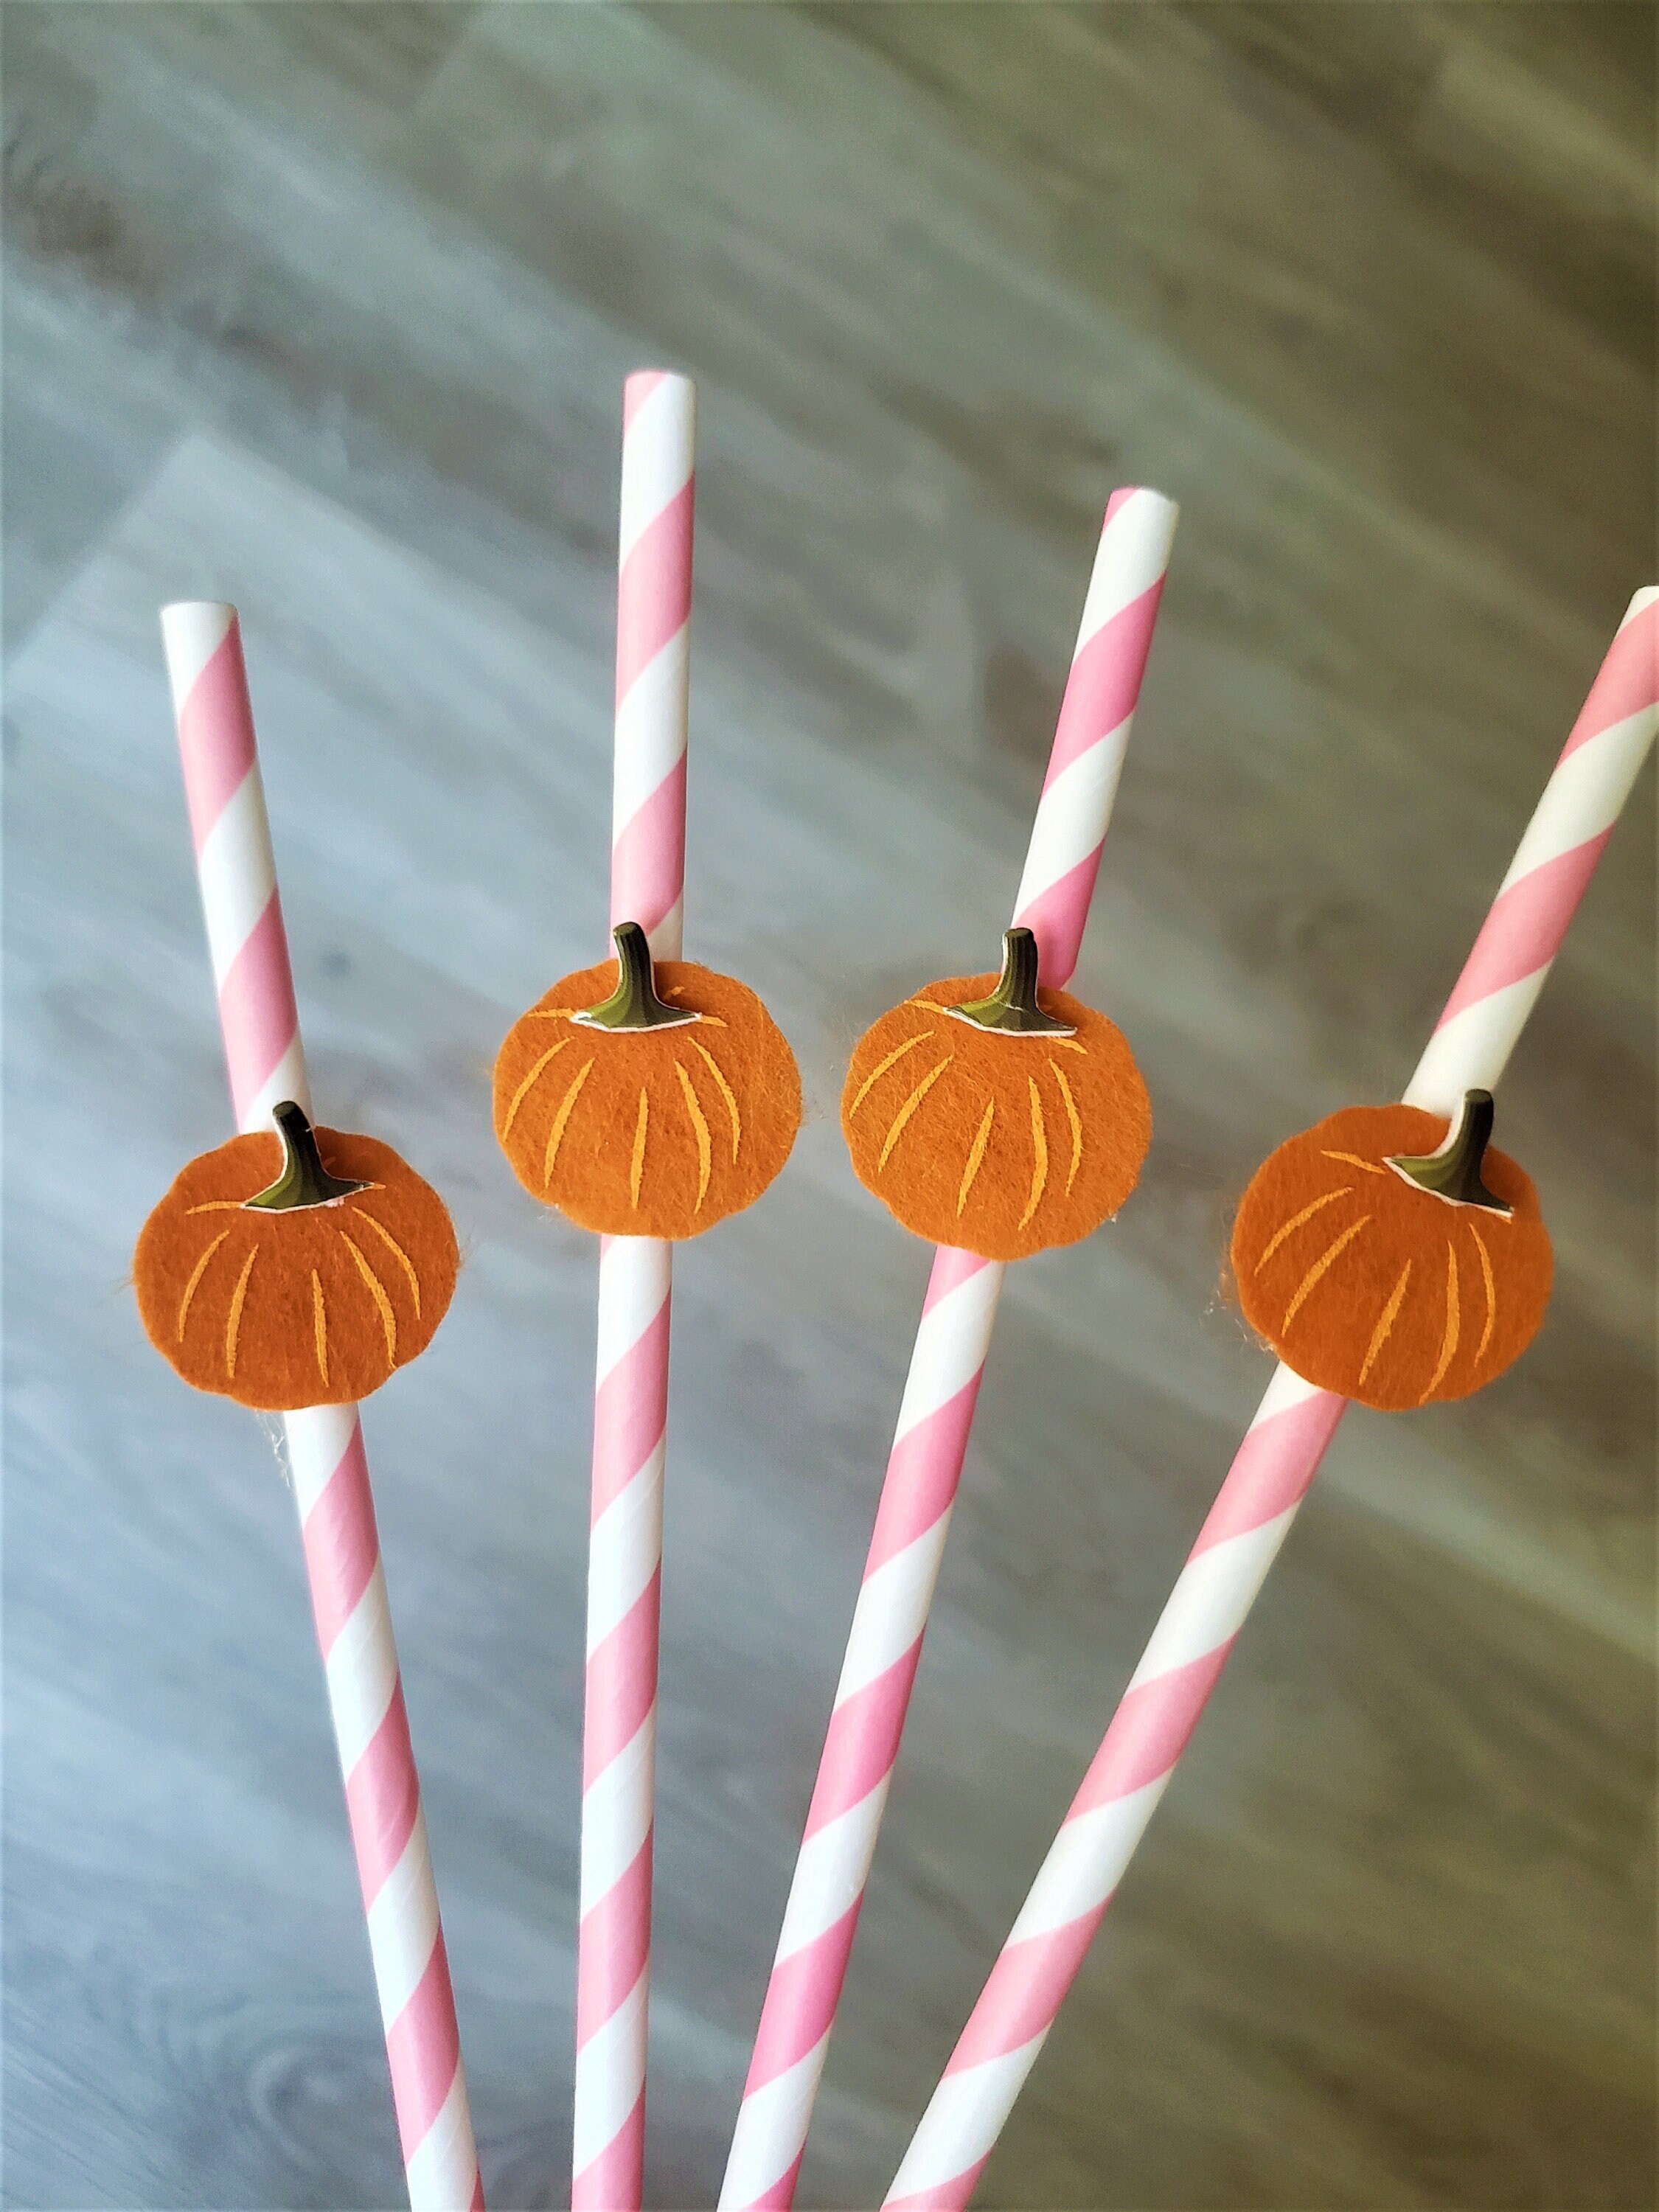 Pink & Orange Pumpkins Reusable Straws